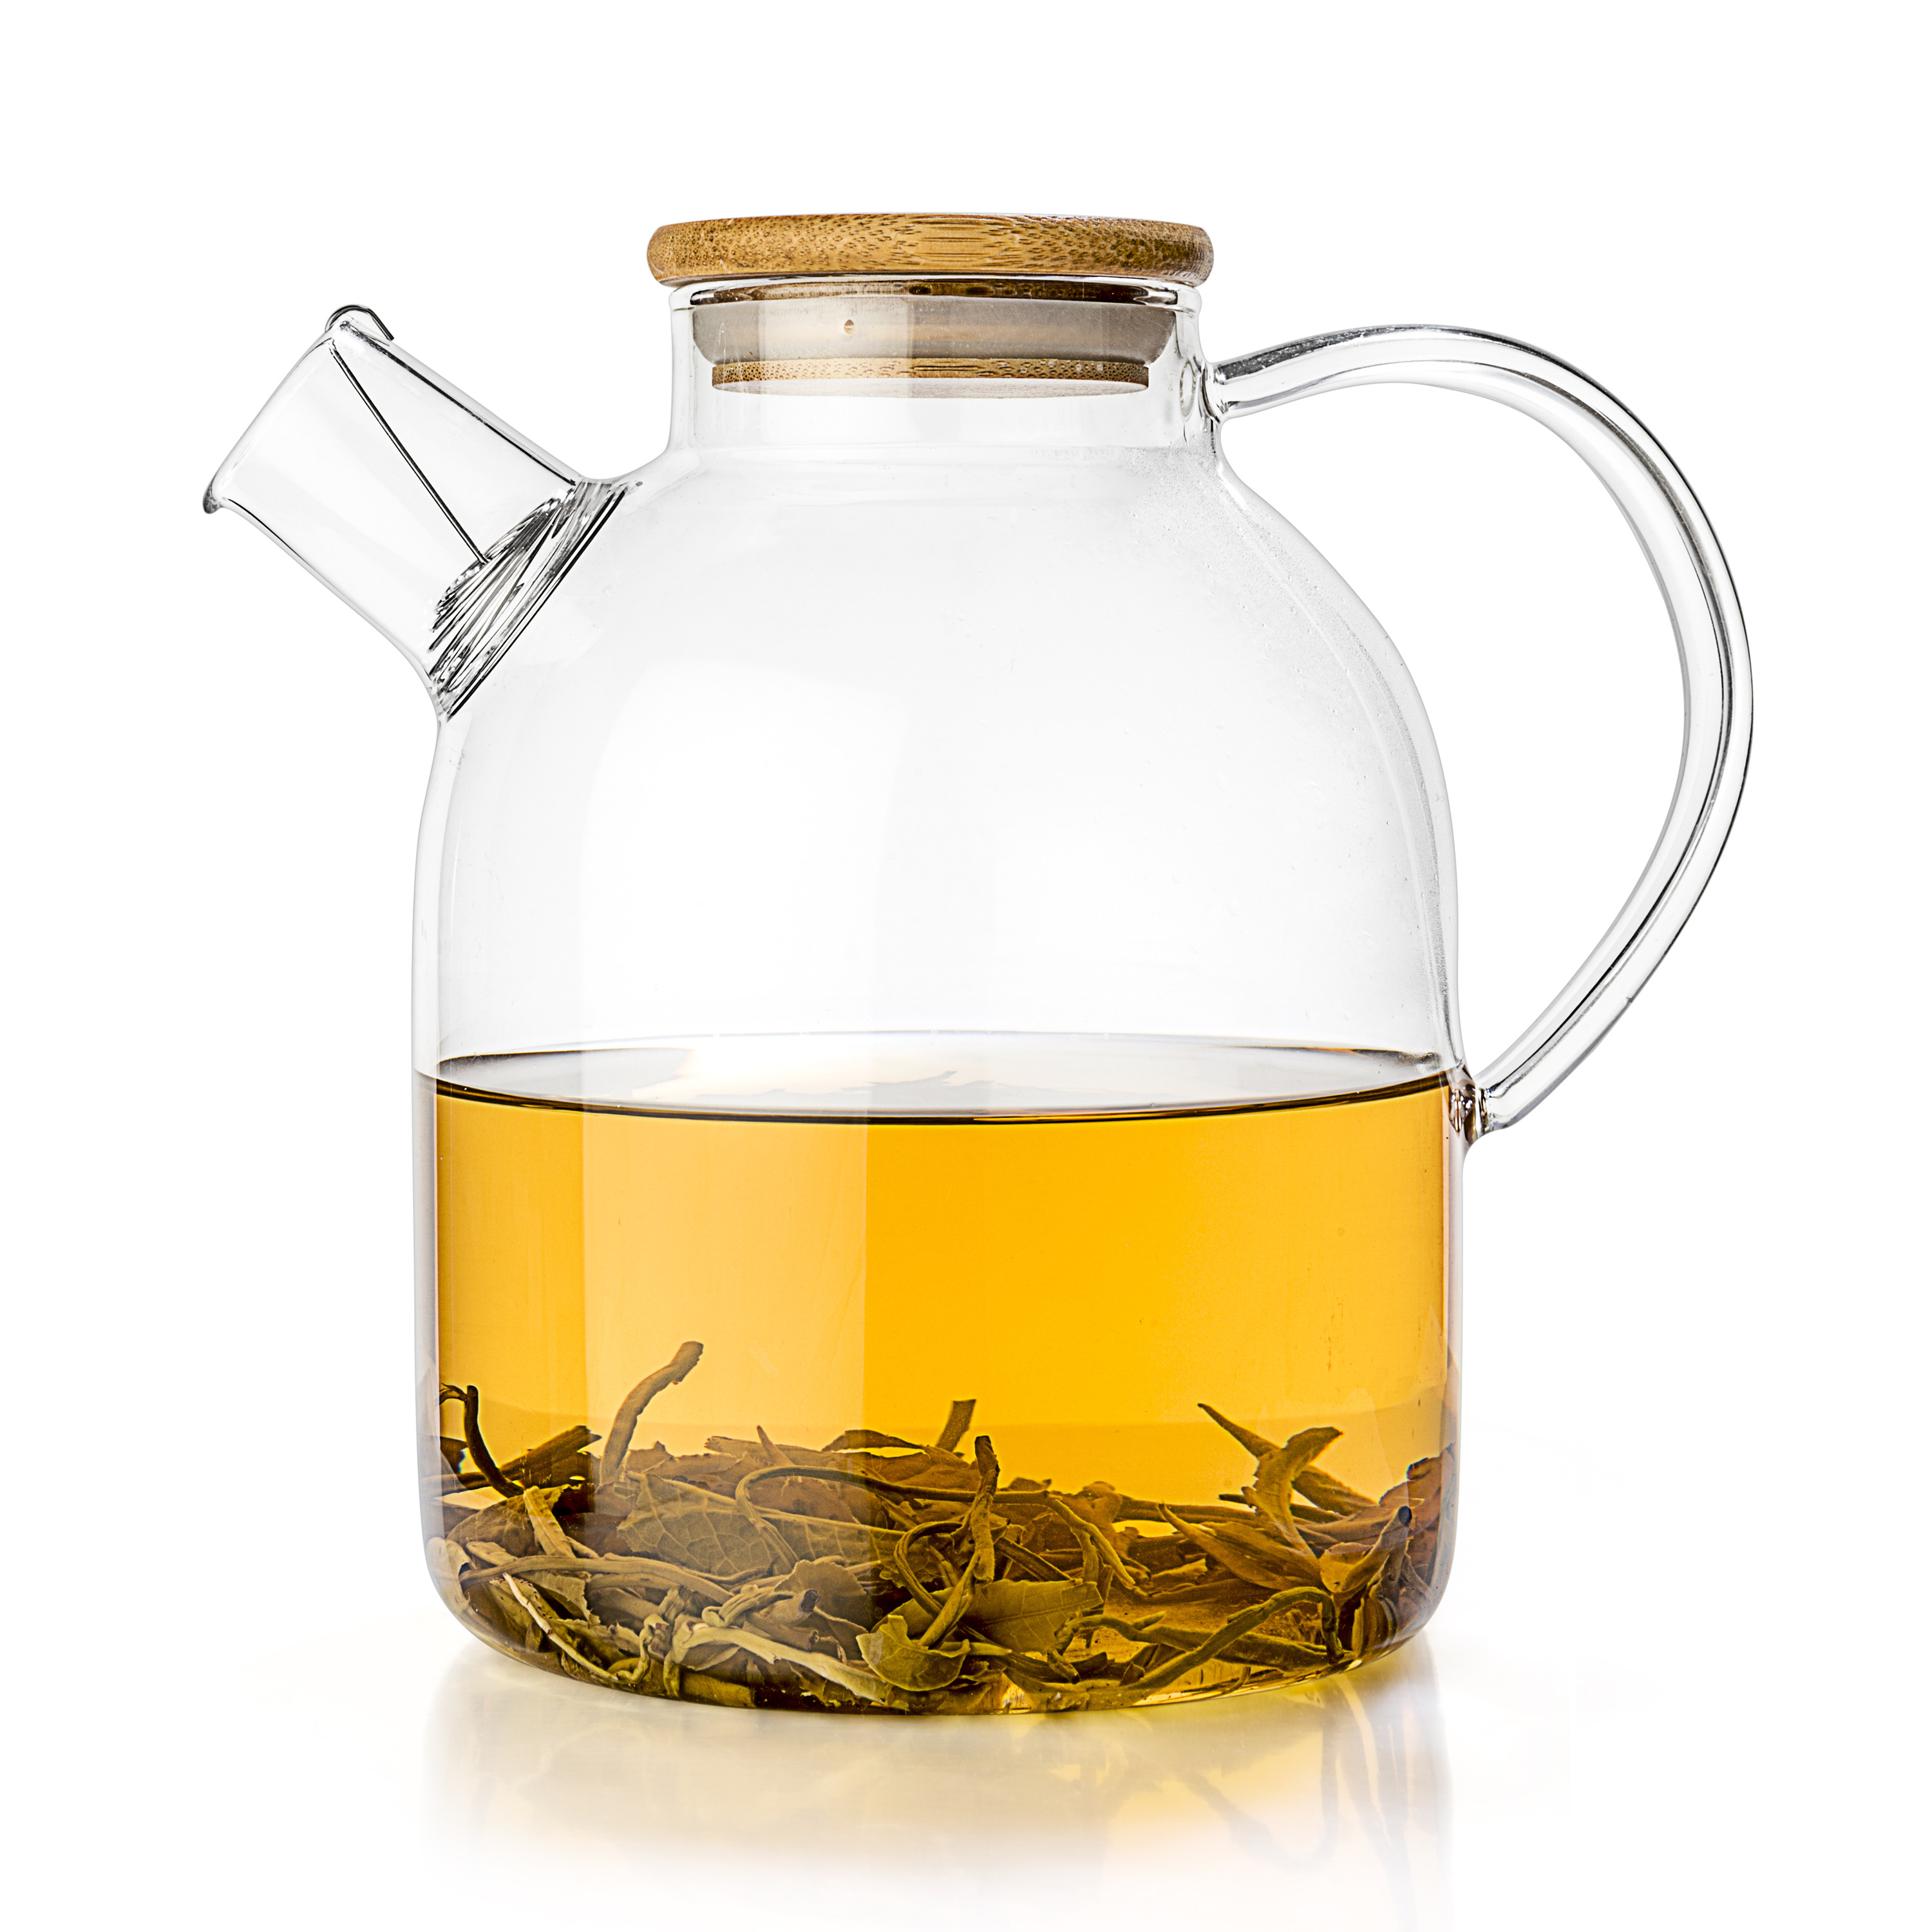 https://cdn.tealyra.com/images/detailed/9/glass-teapot-and-kettle.jpg